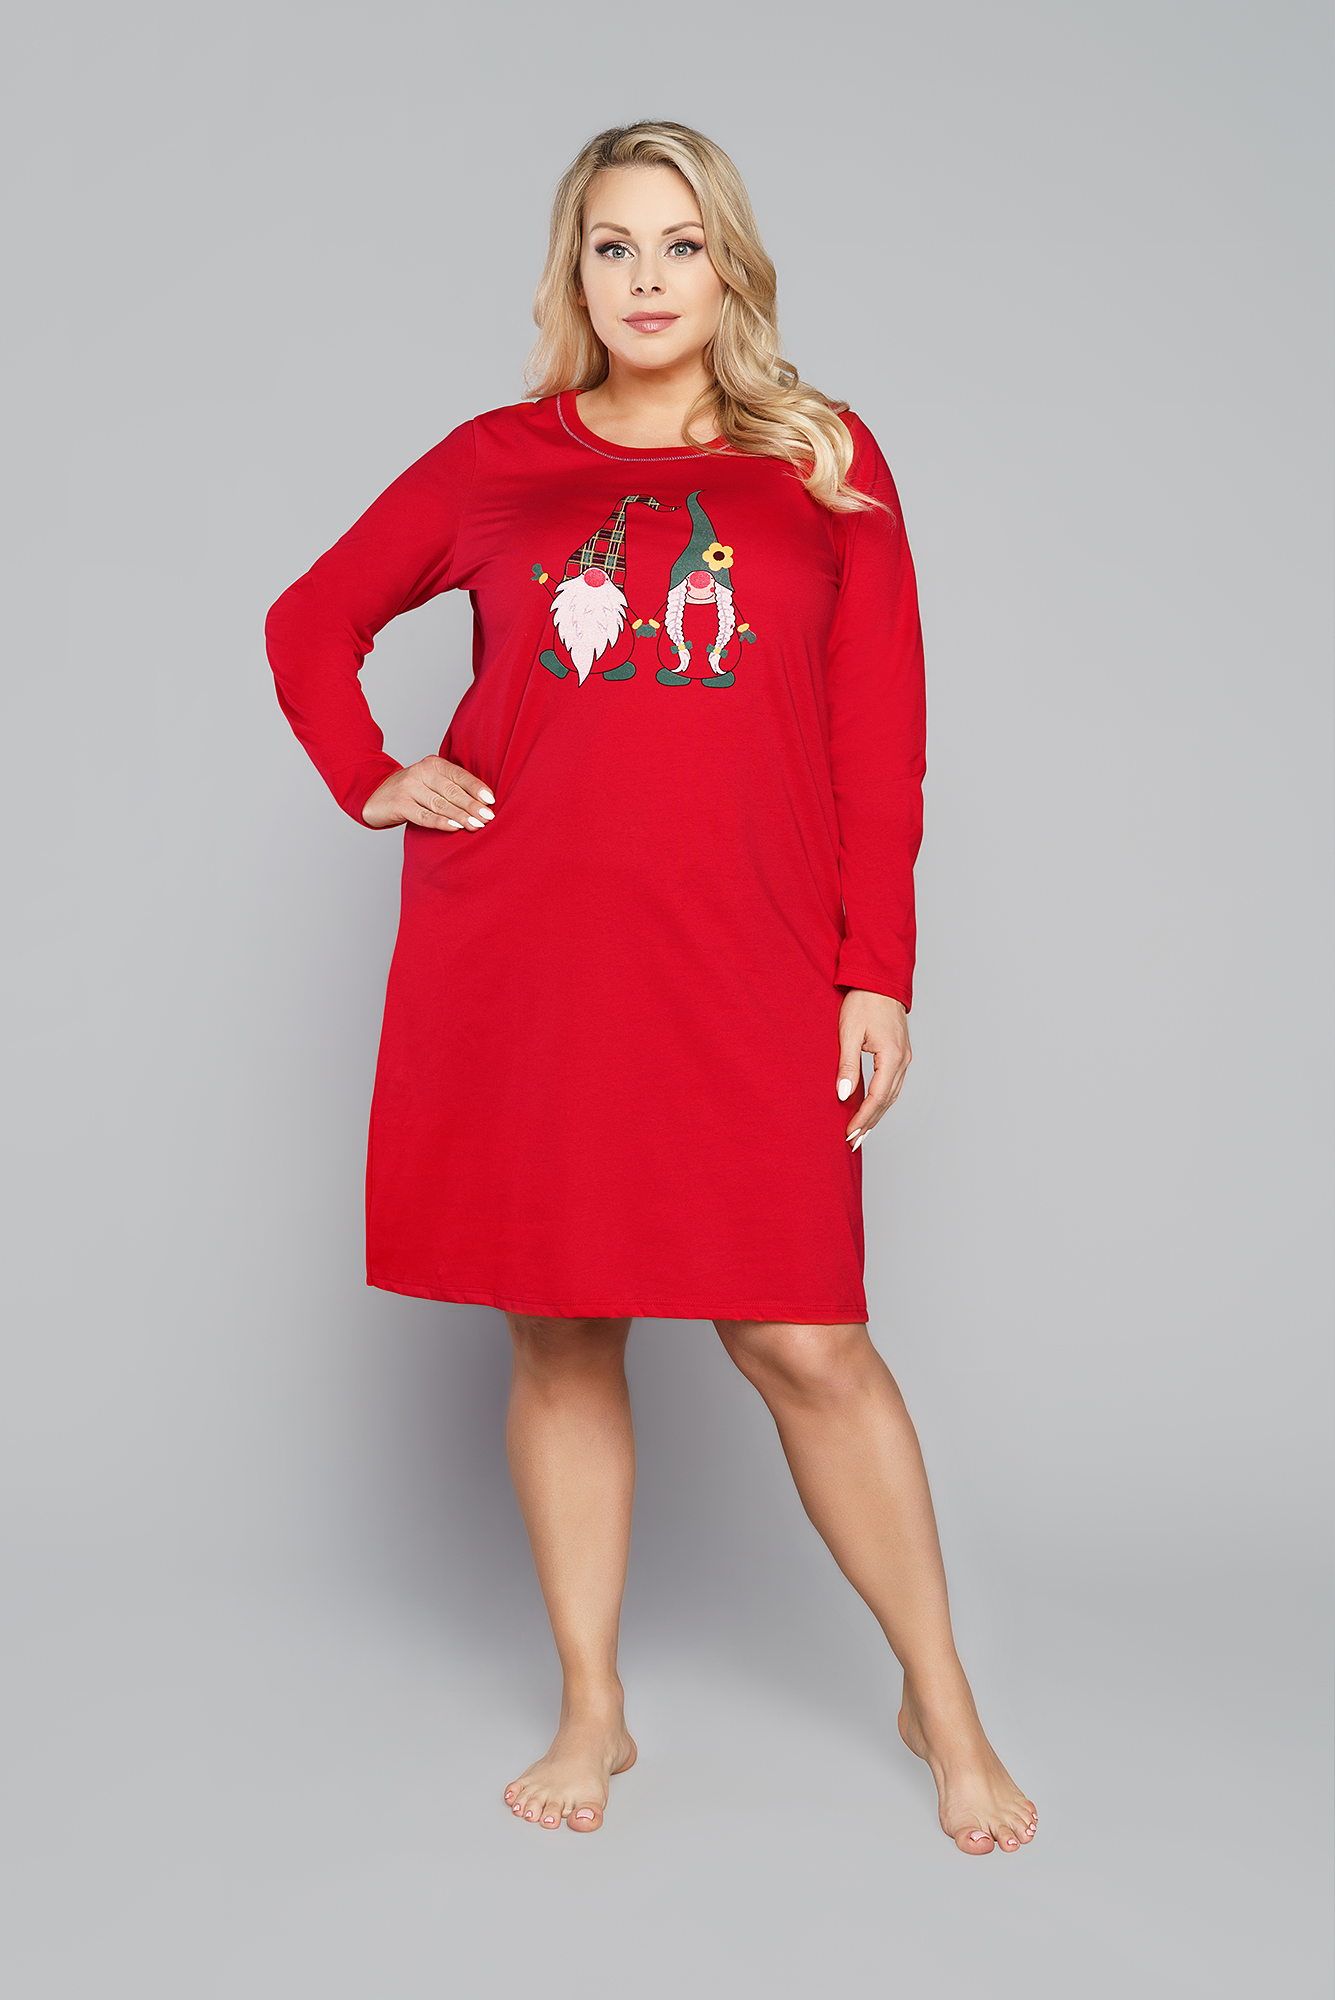 Women's Santa Long Sleeve Shirt - Red